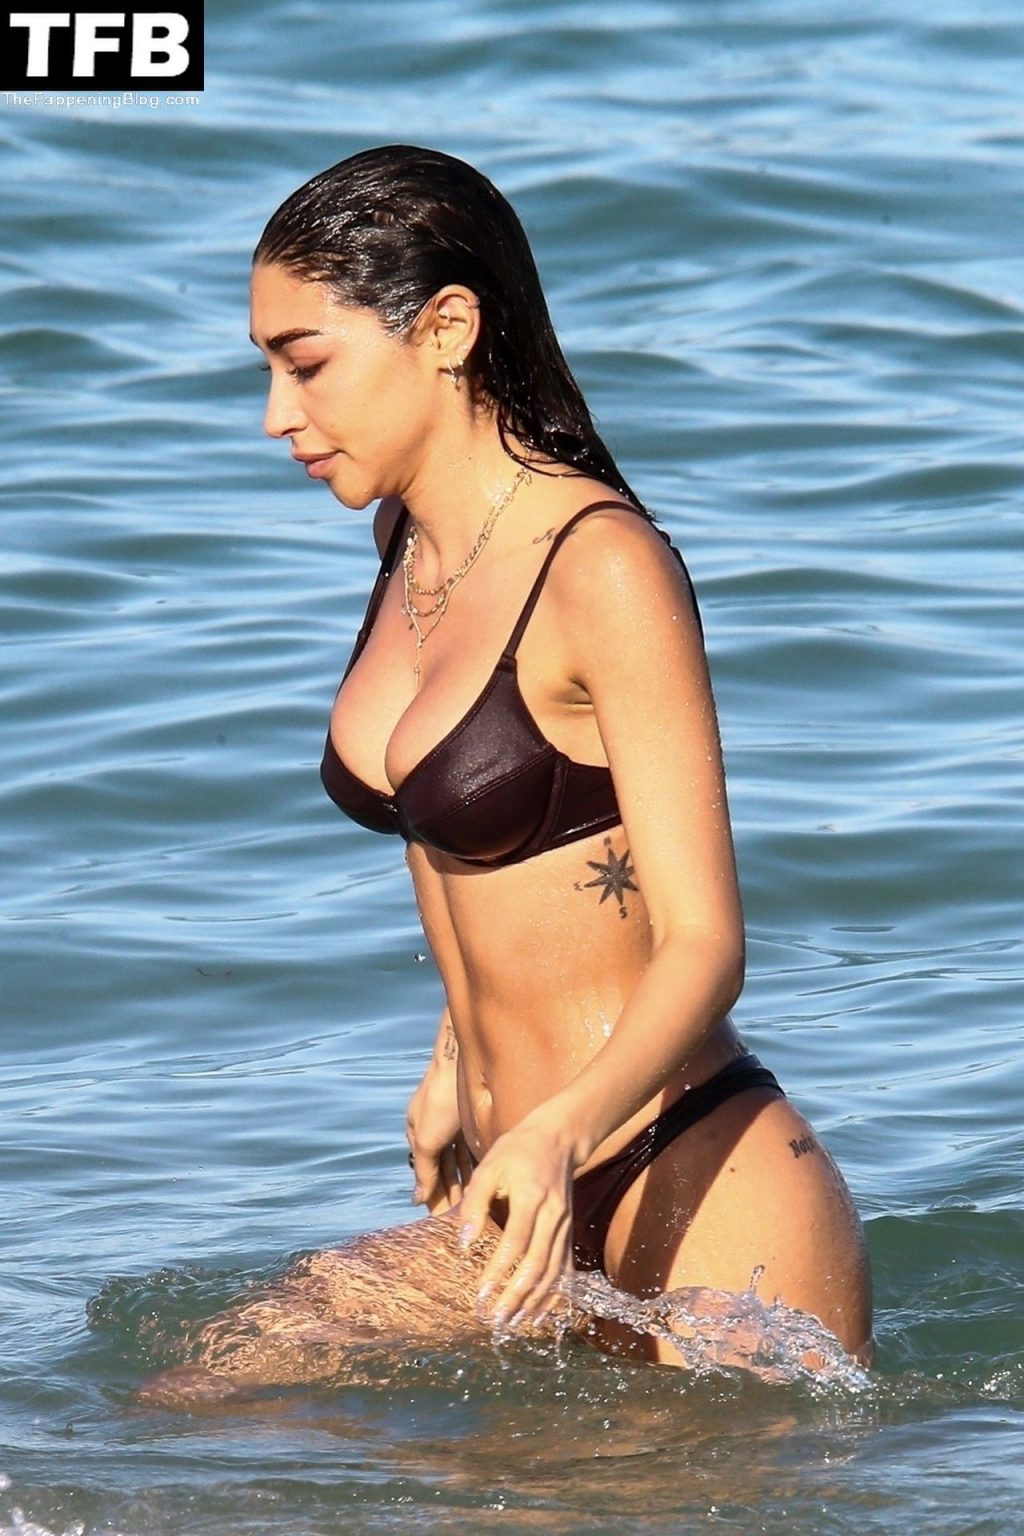 Chantel Jeffries Looks Stunning in a Tiny Bikini on the Beach in Miami (43 Photos)